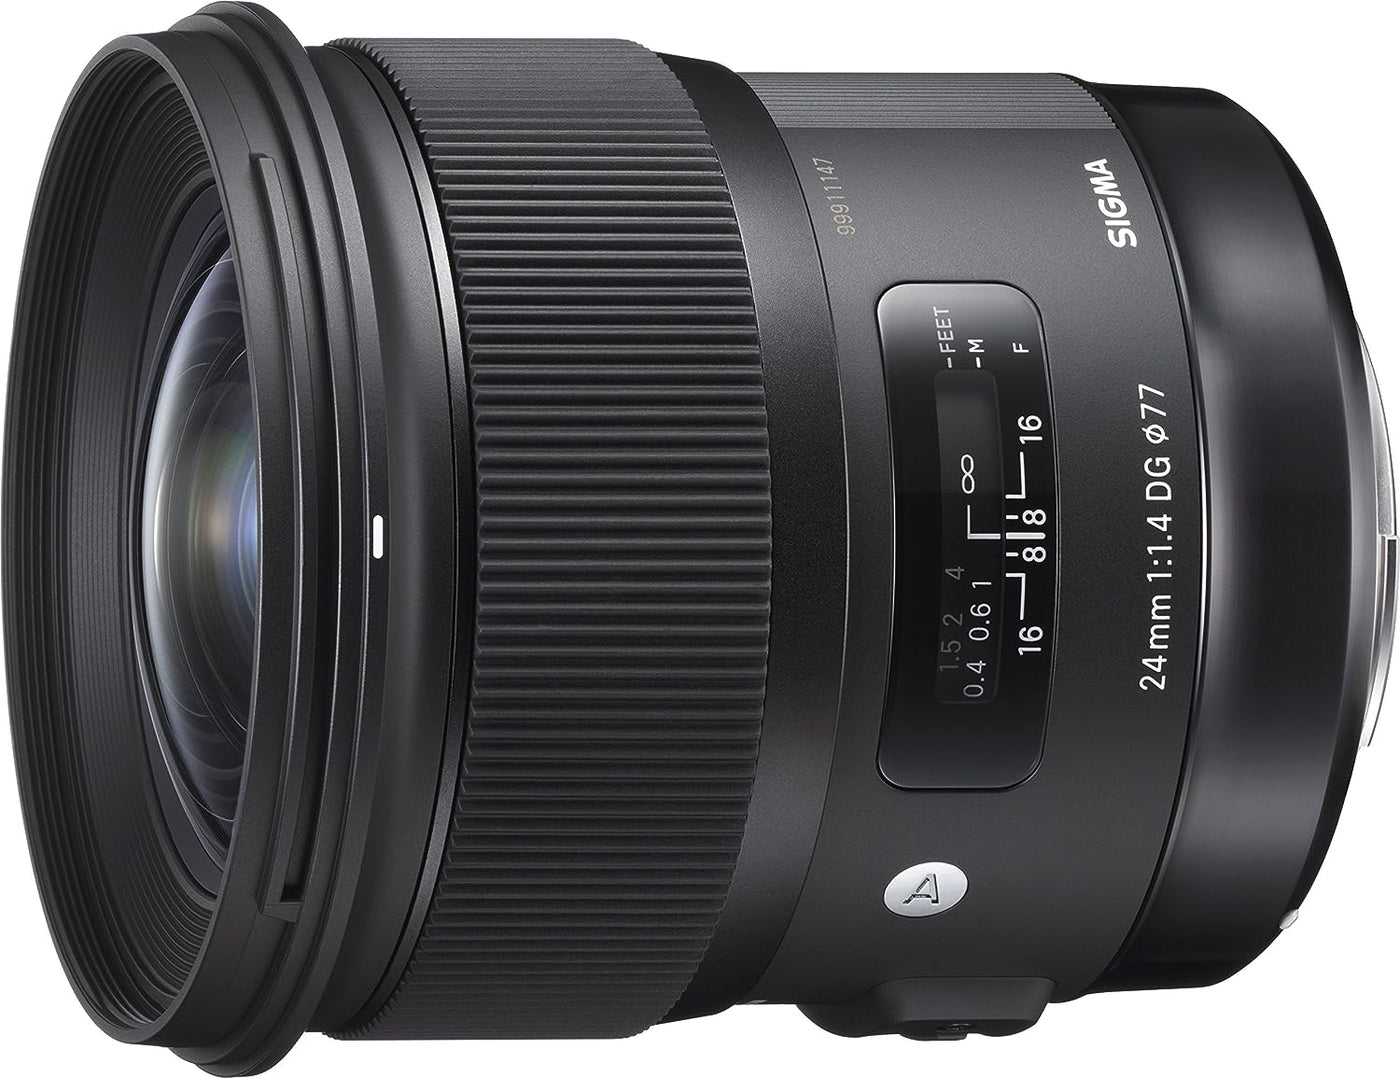 Sigma 24mm f/1.4 DG HSM Art Lens - $389